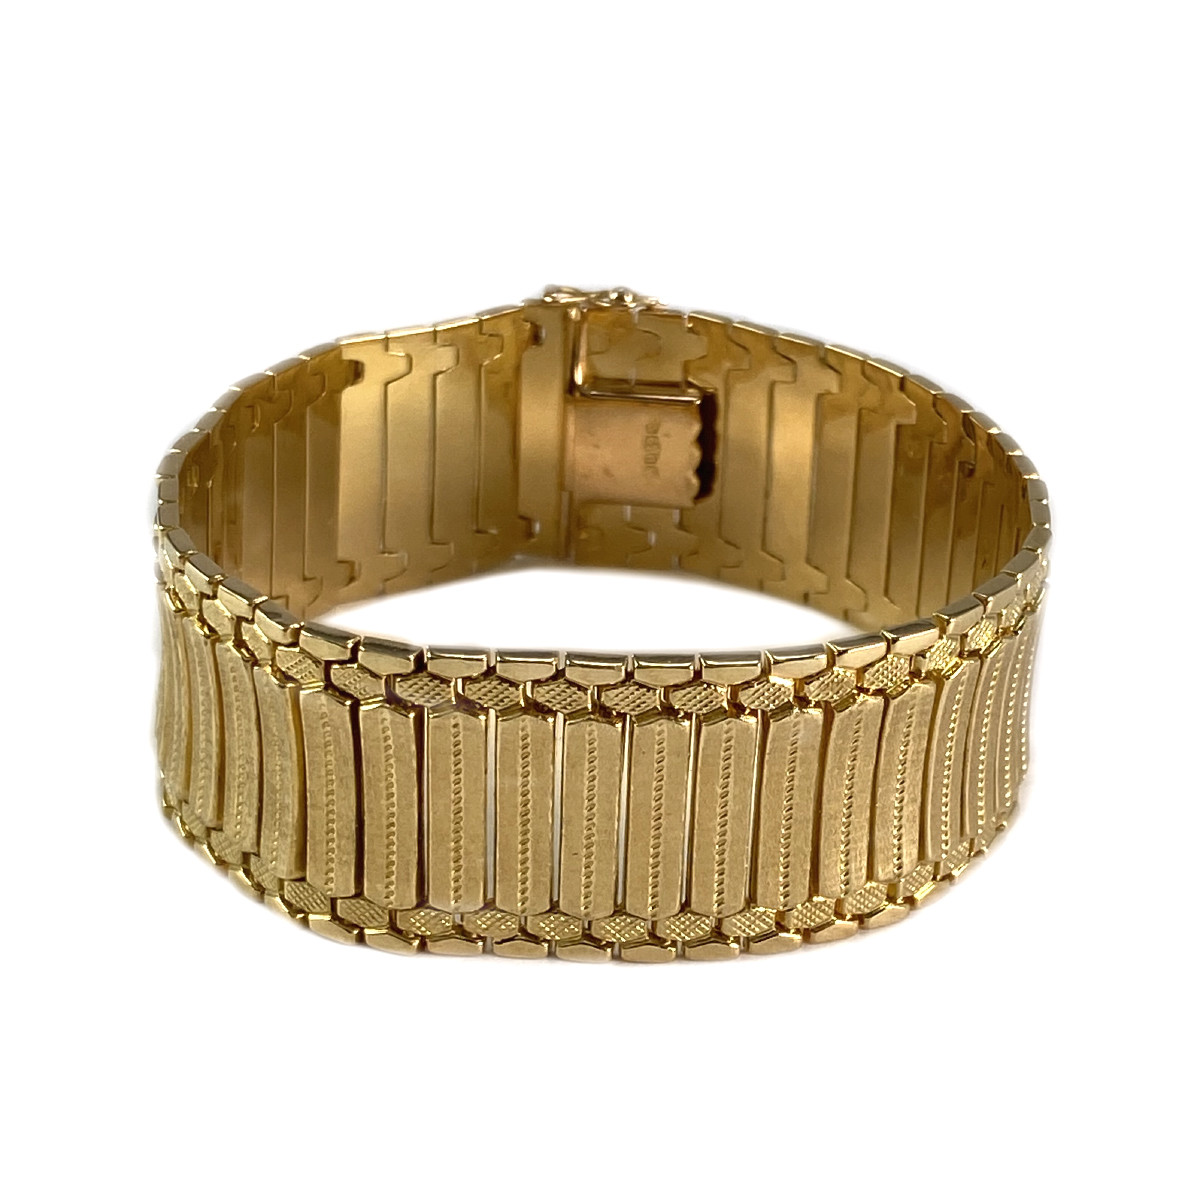 Bracelet d'occasion or 750 jaune 20 cm